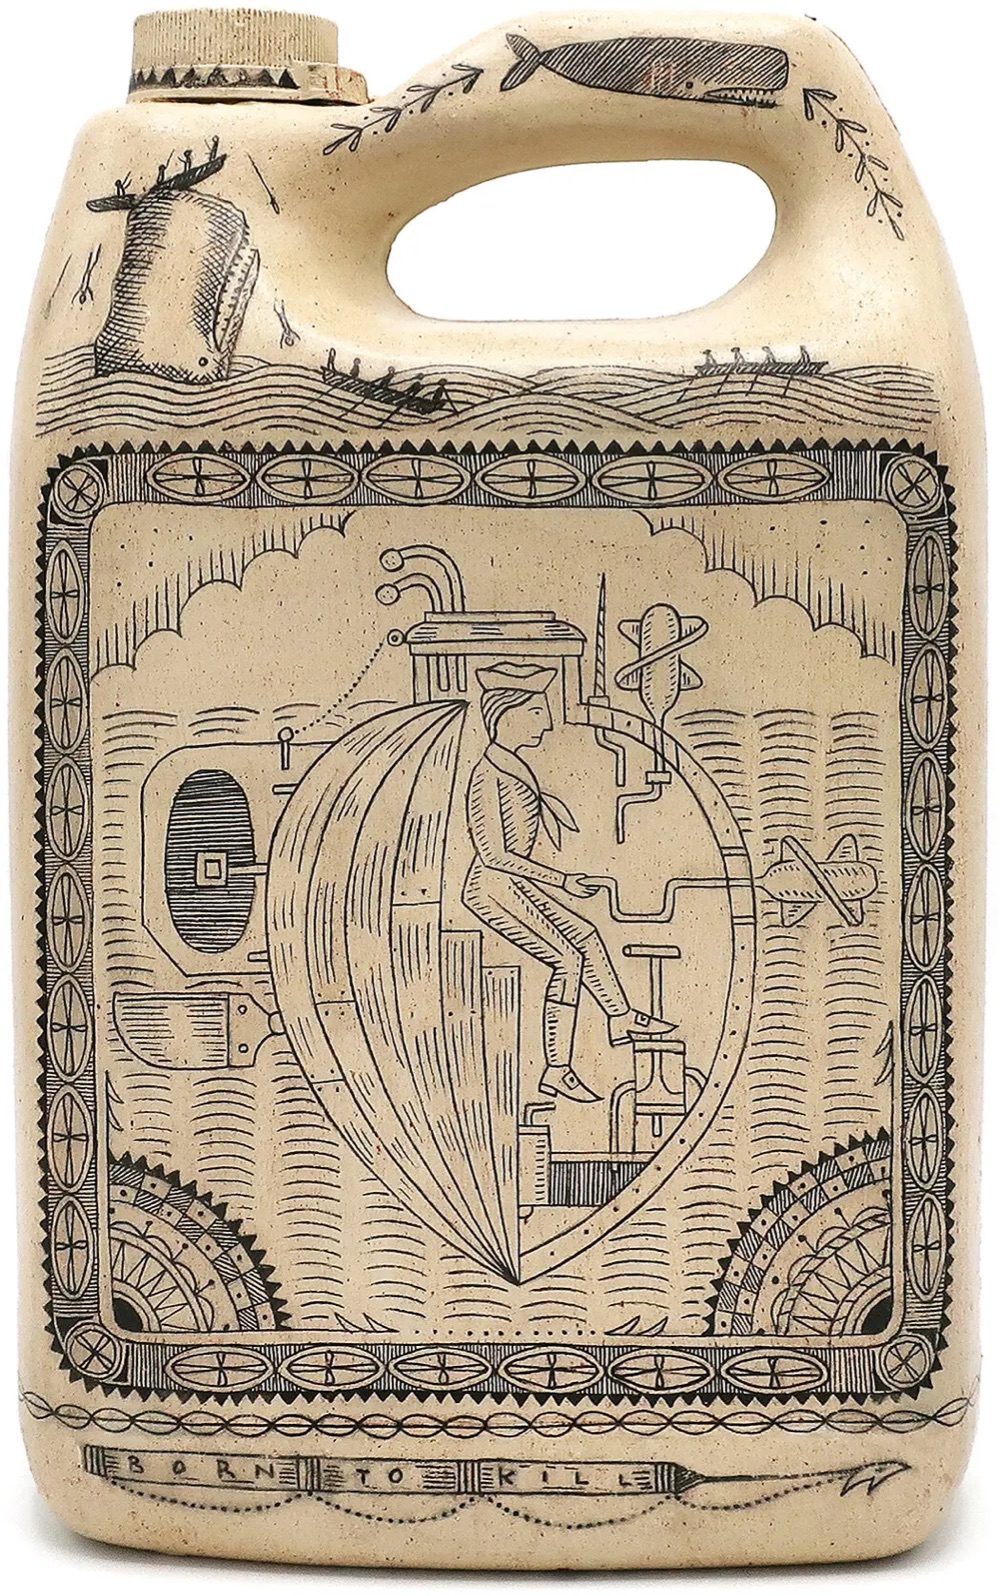 scrimshaw art etched onto a plastic jug